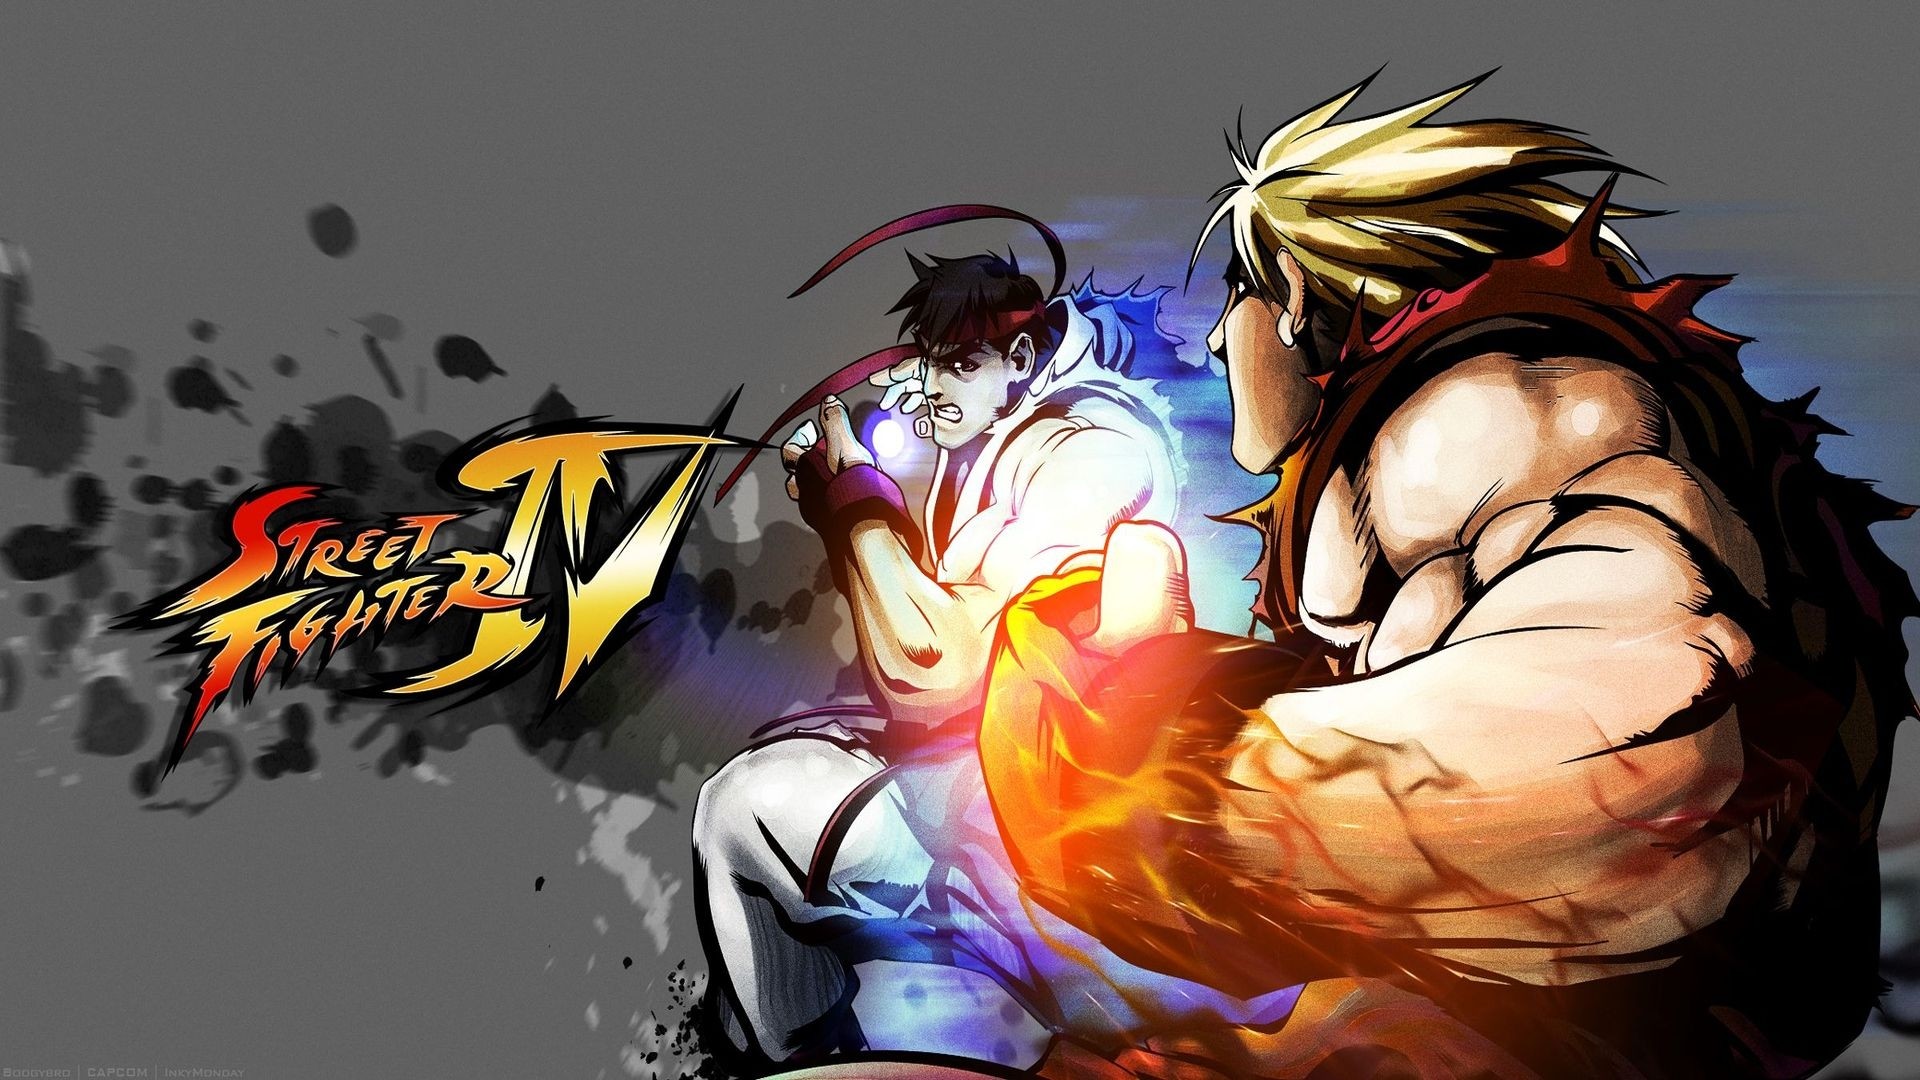 1920x1080 Street Fighter IV - Ryu vs. Ken Wallpapers